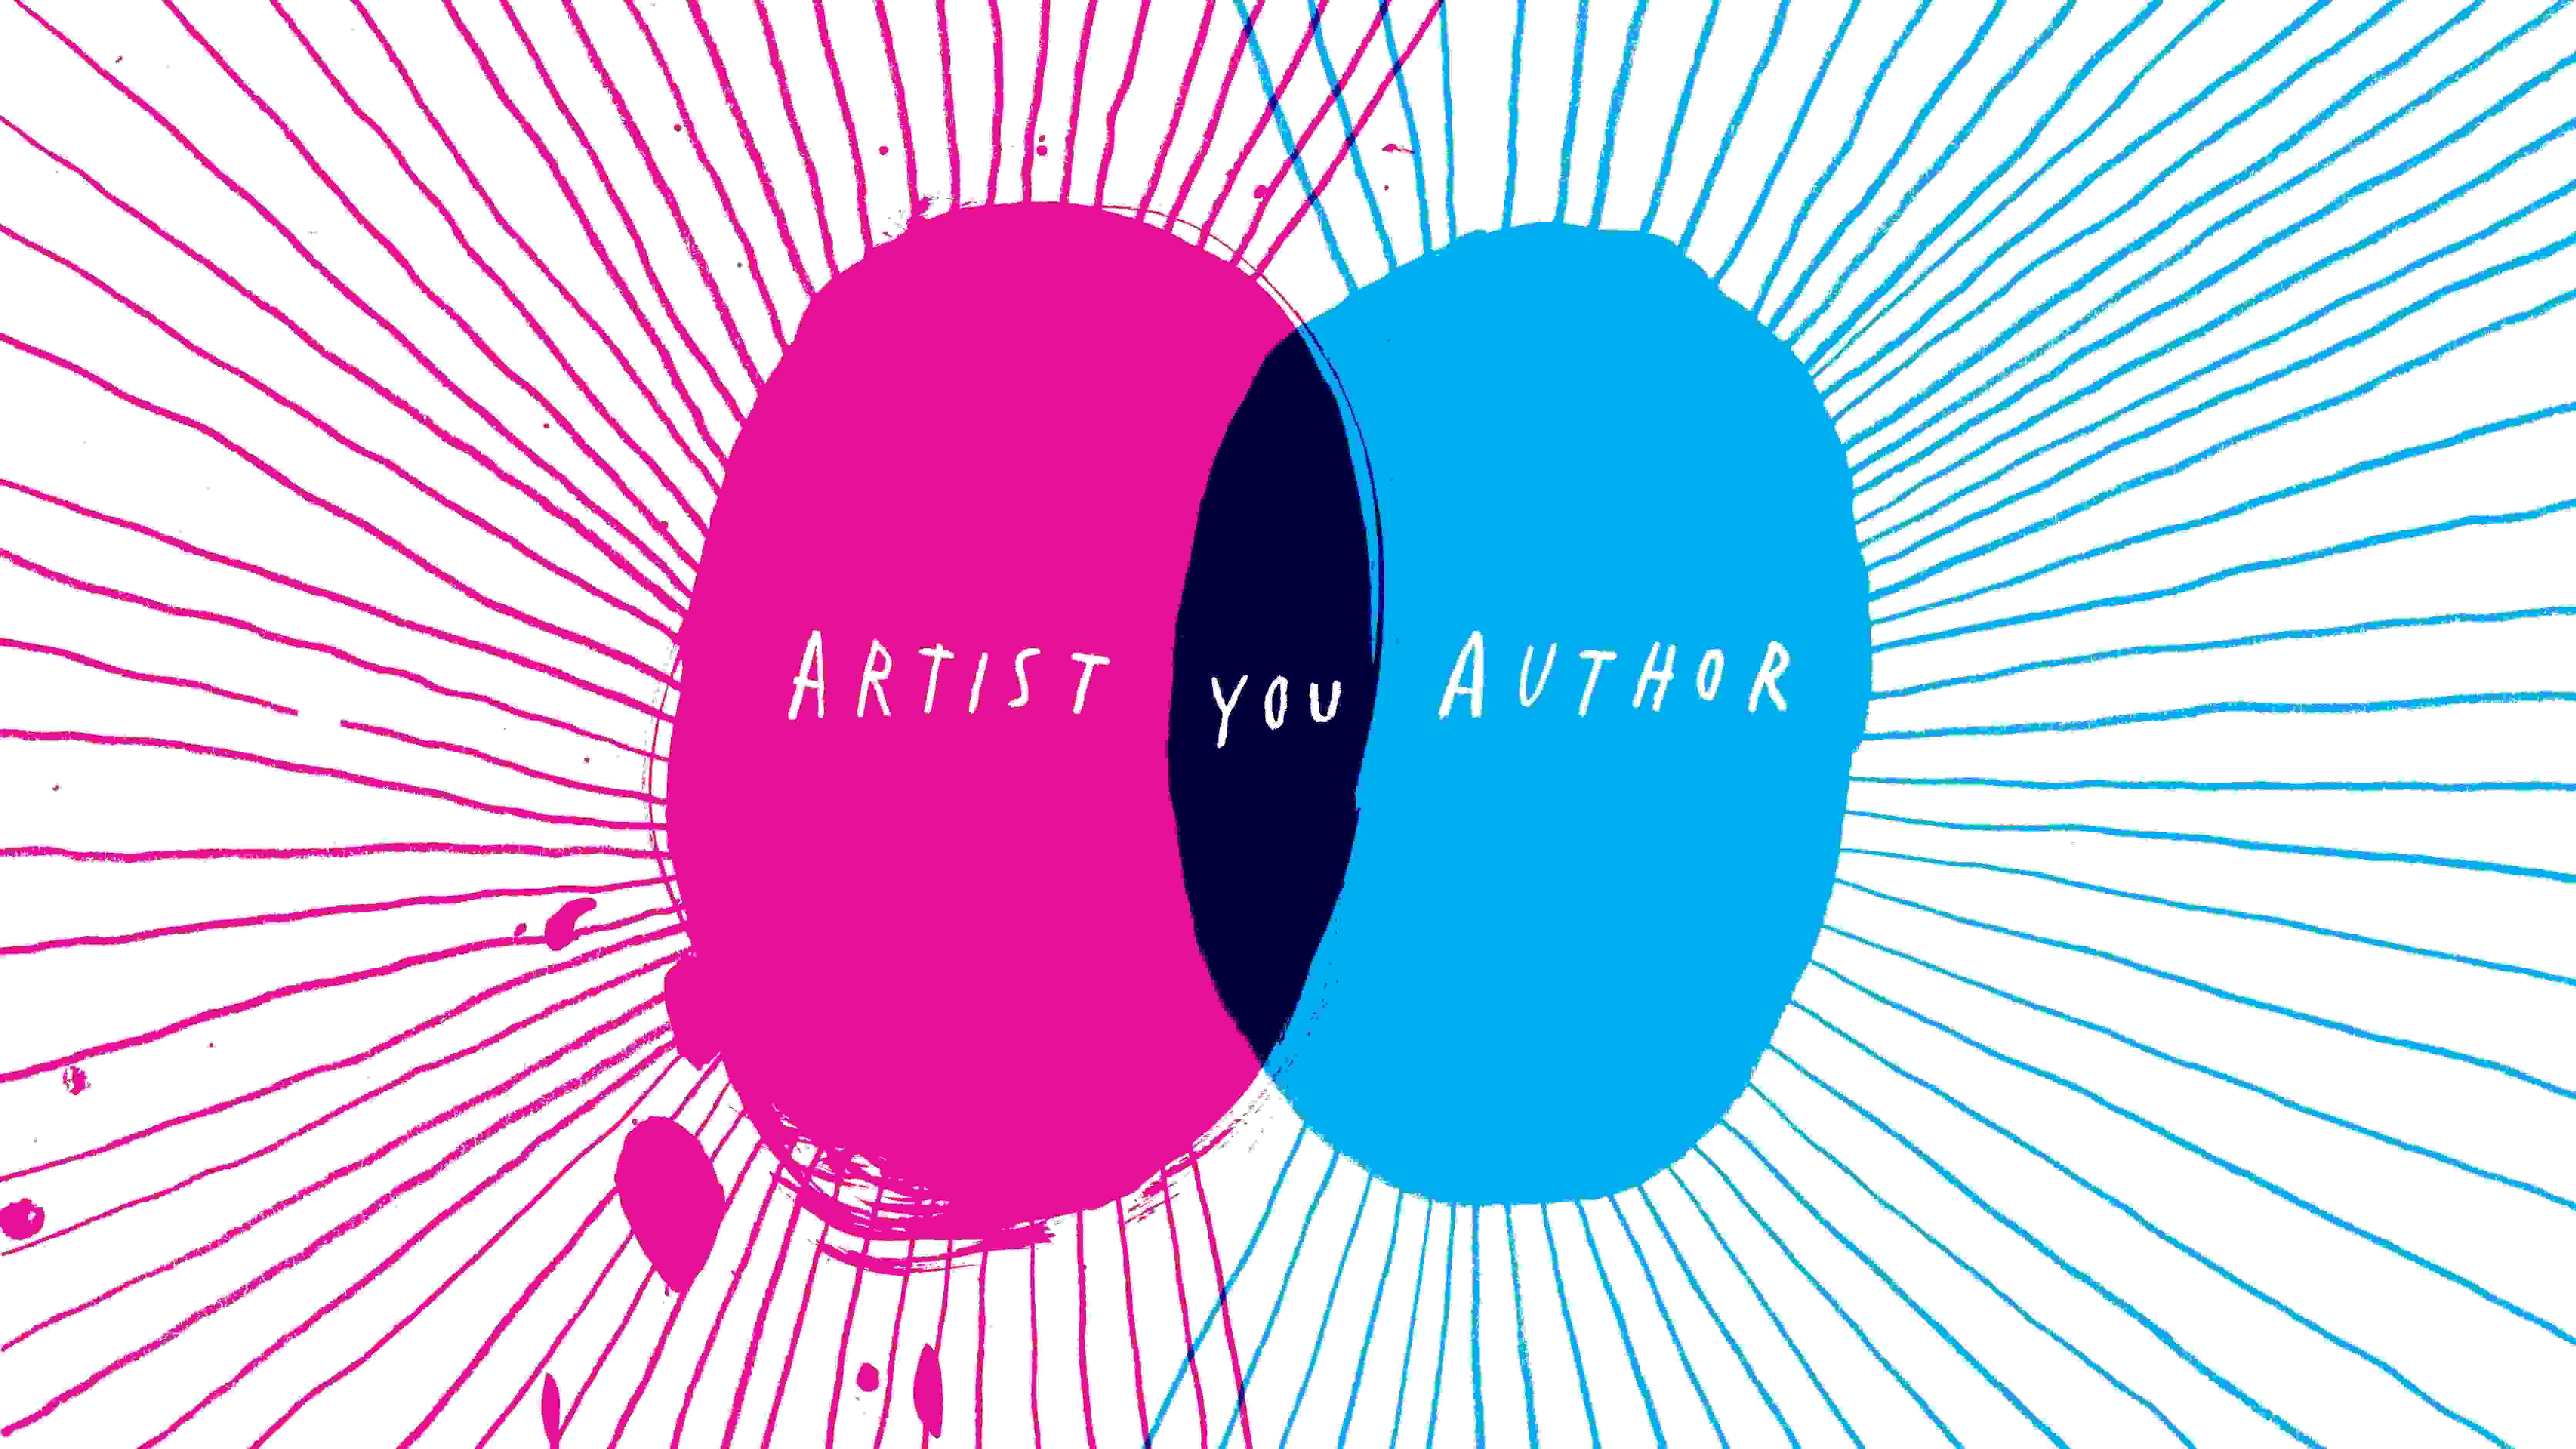 A graphic design of "Artist & Author”